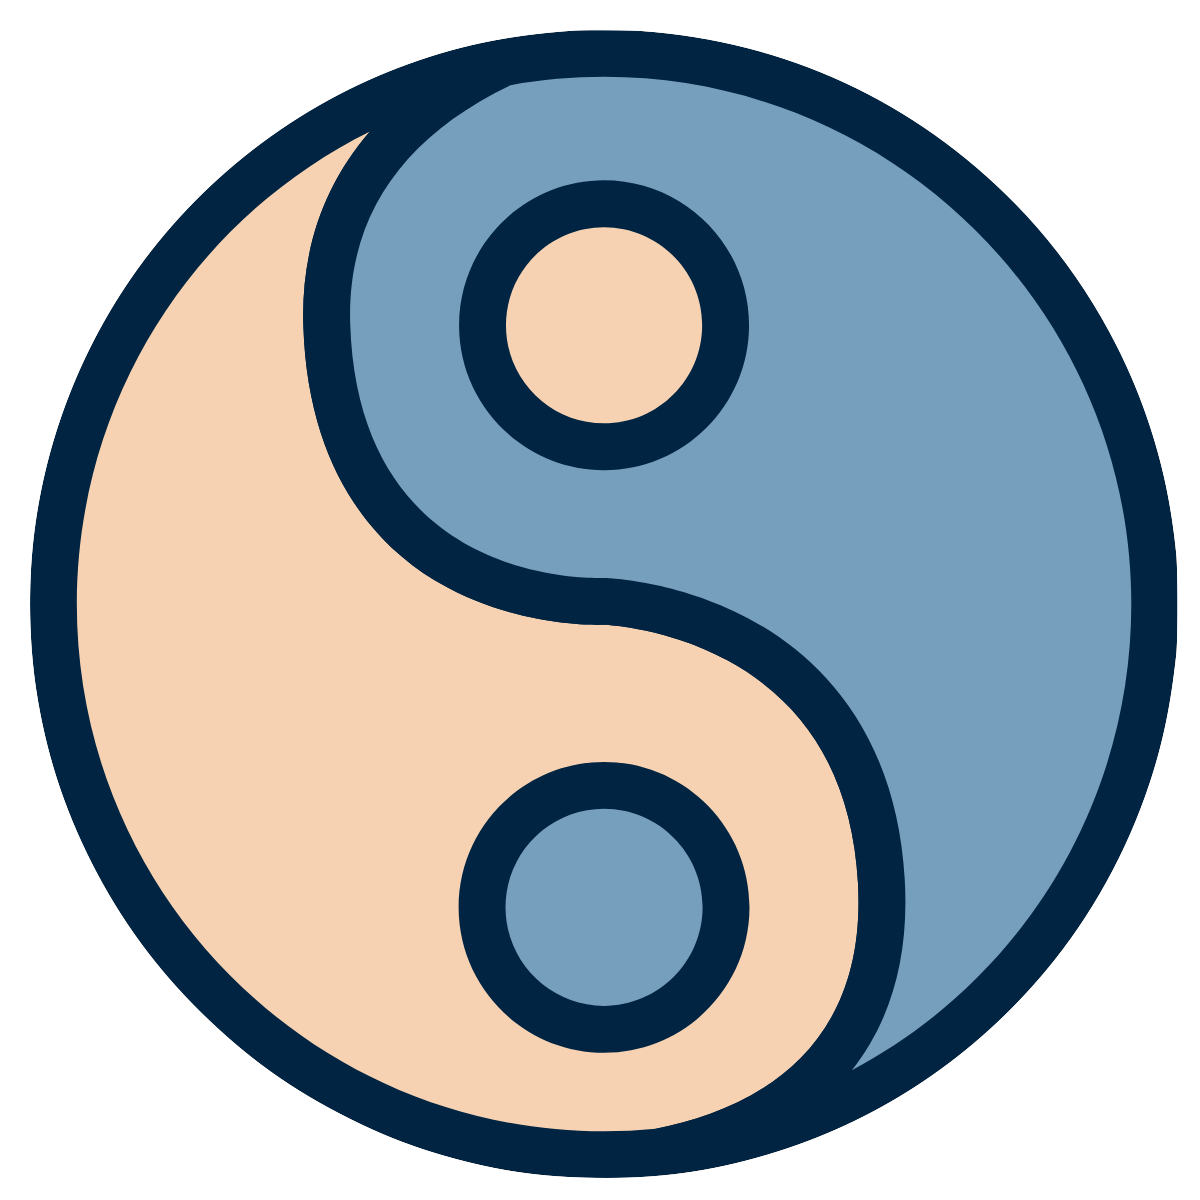 yin yoga